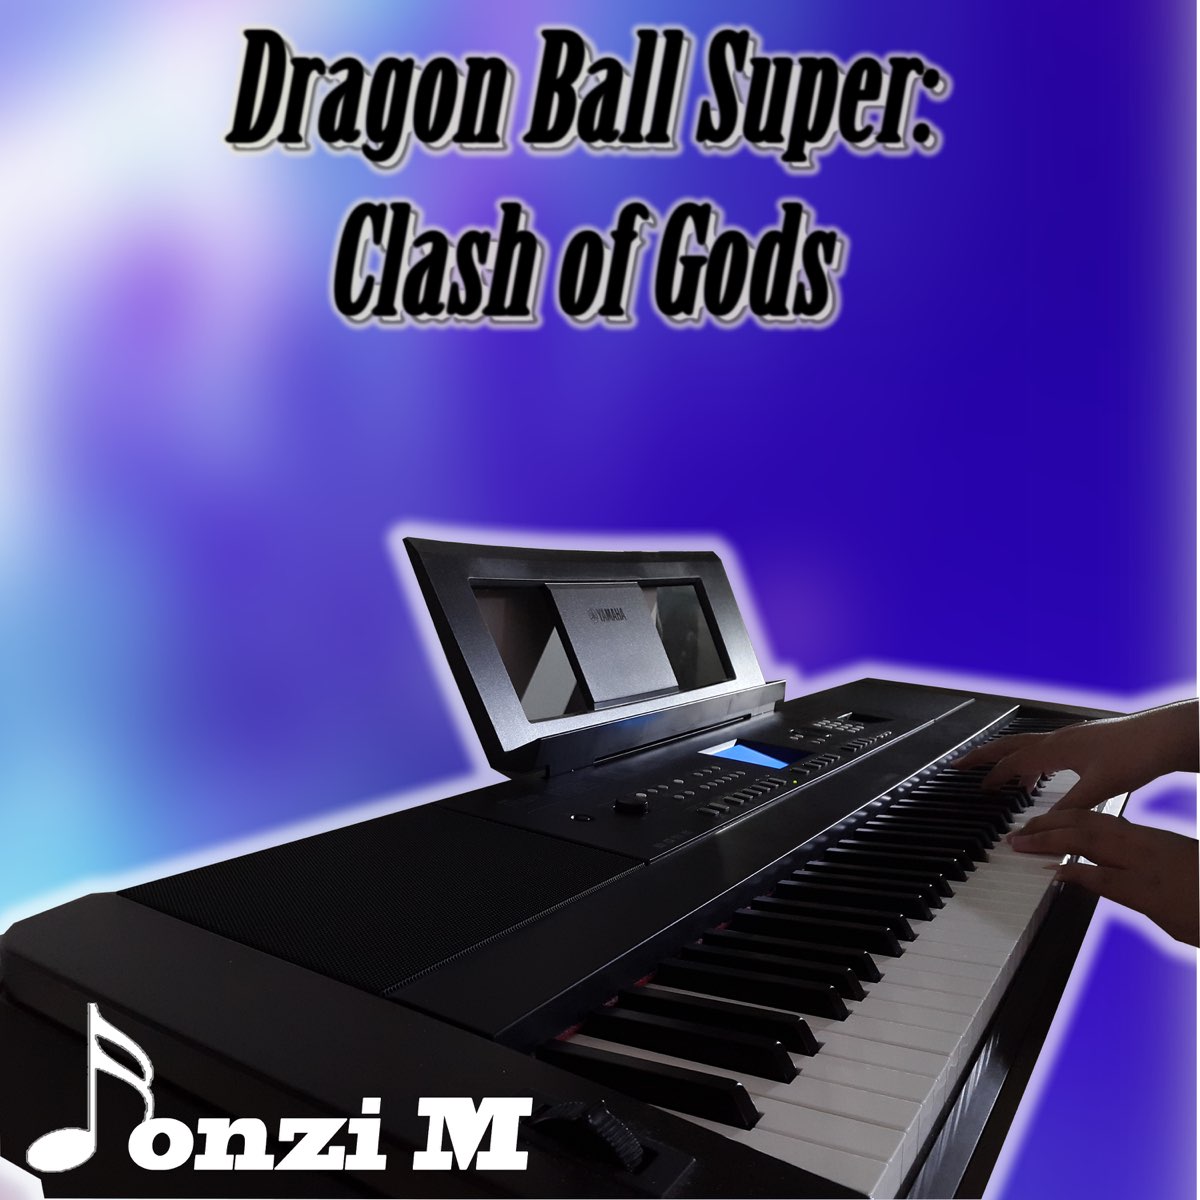 Clash of Gods (From "Dragon Ball Super") - Single de Fonzi M en Apple Music